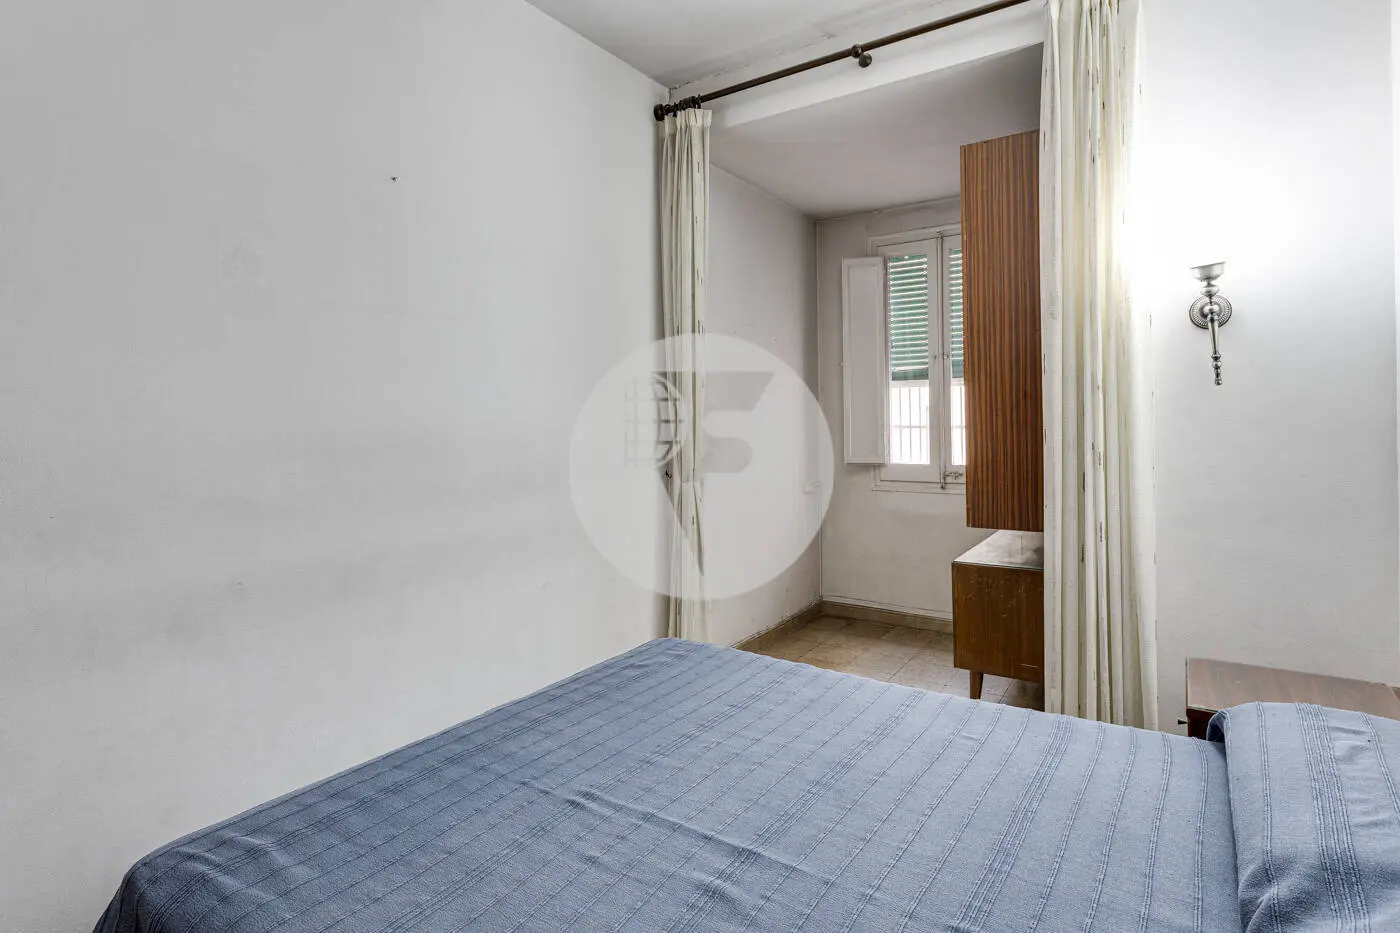 3-bedroom apartment located in the Nova Esquerra de l'Eixample neighborhood of Barcelona. 18